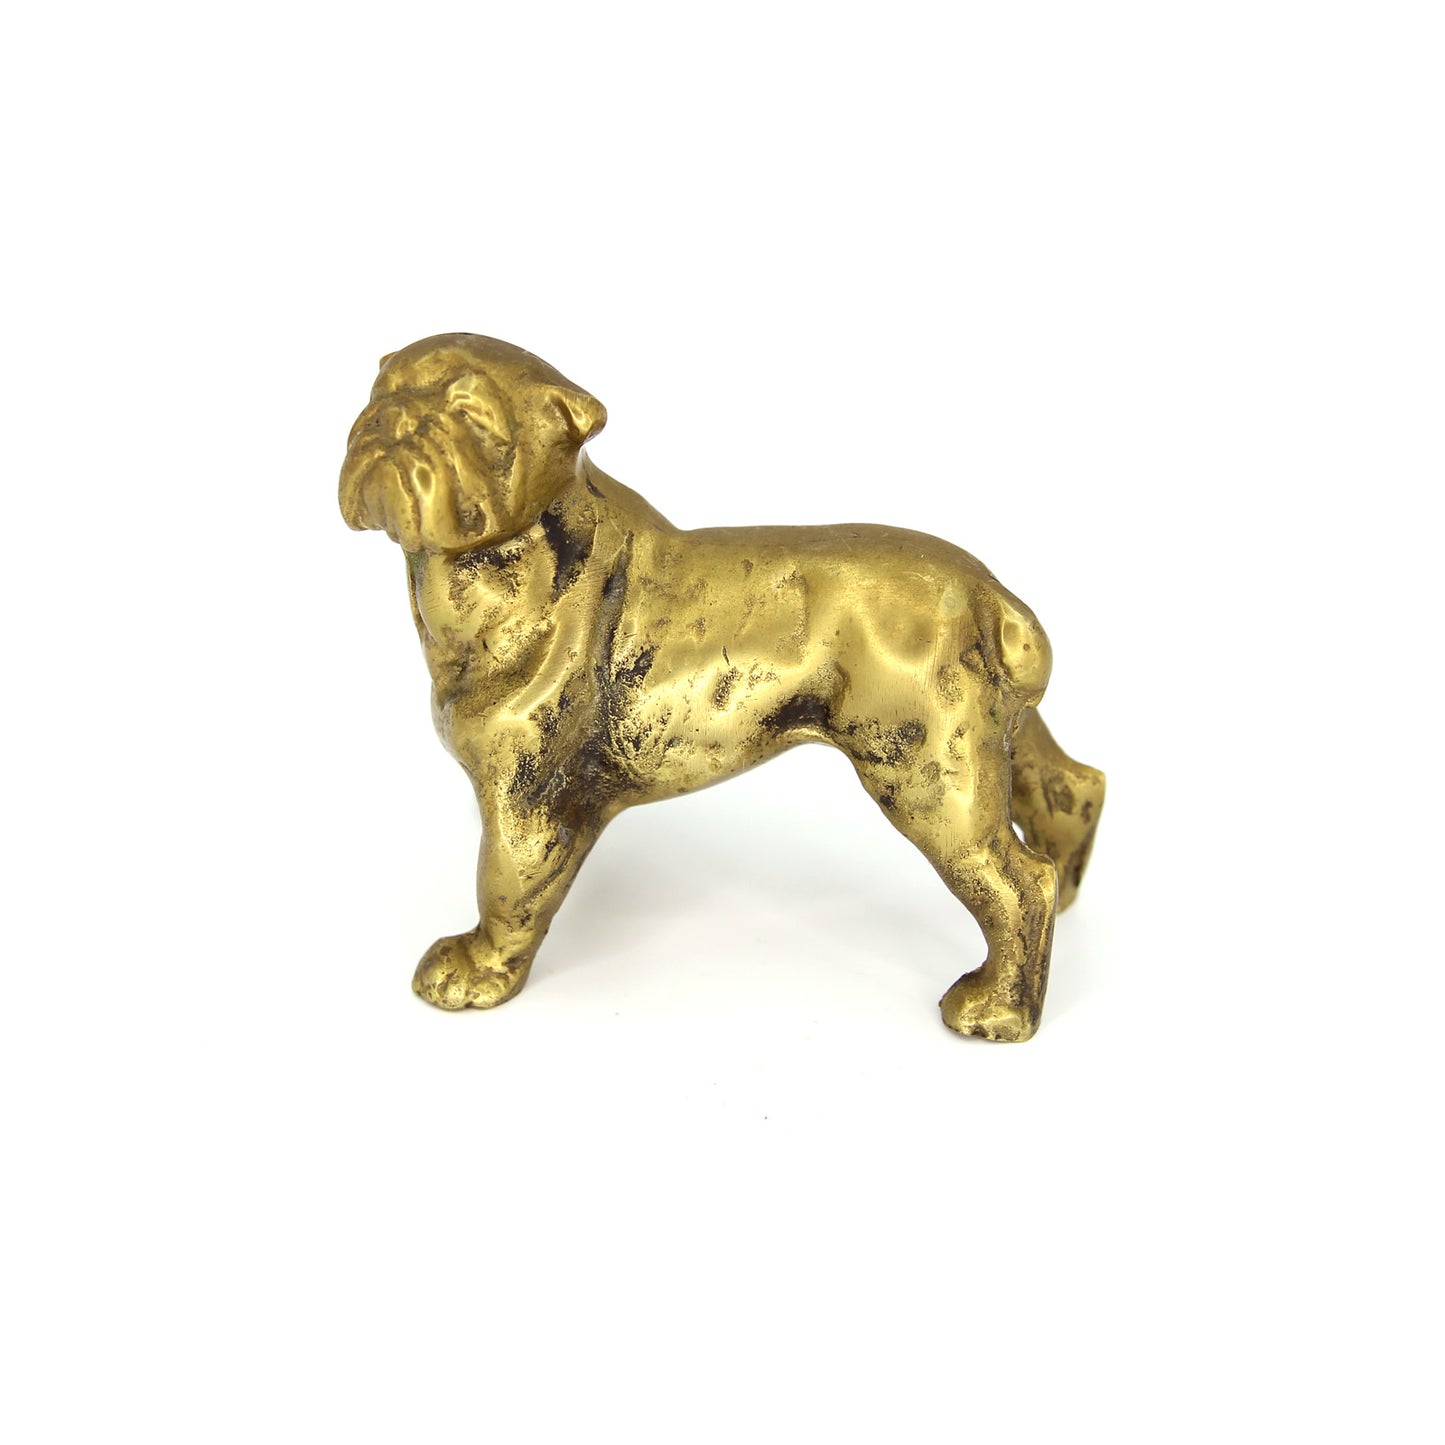 Vintage Brass Bulldog Paperweight - SOLD